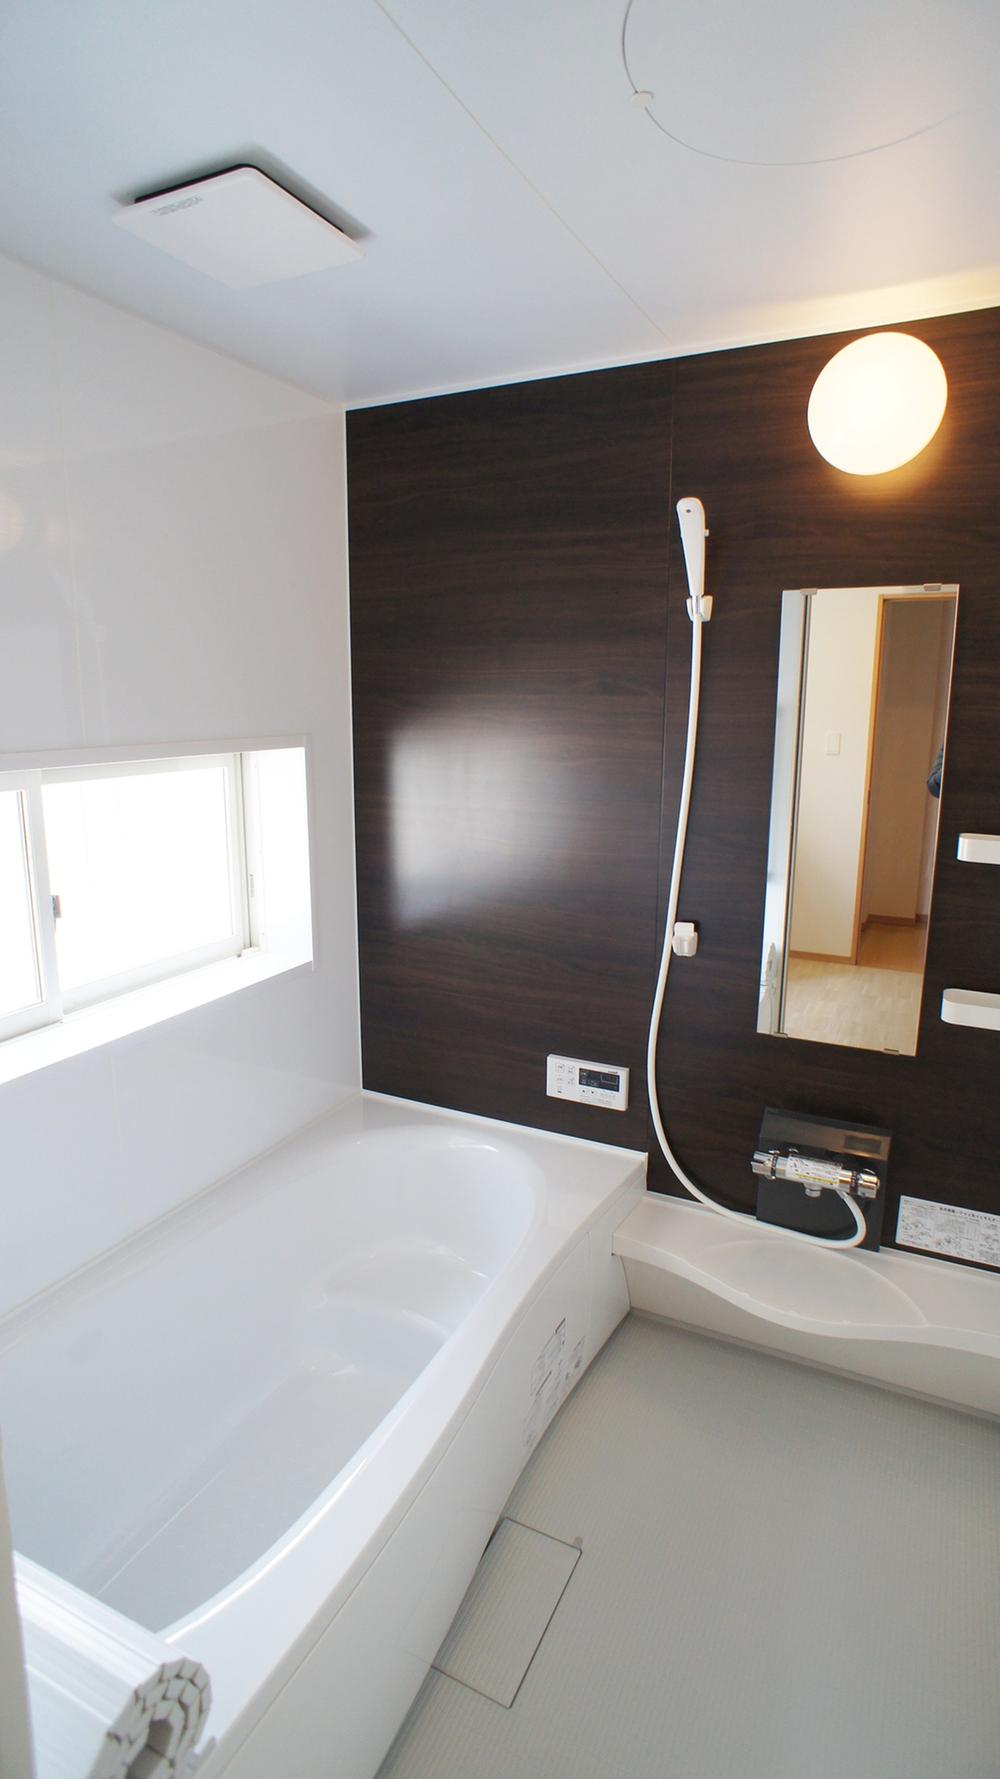 Same specifications photo (bathroom). Bathroom same specification example